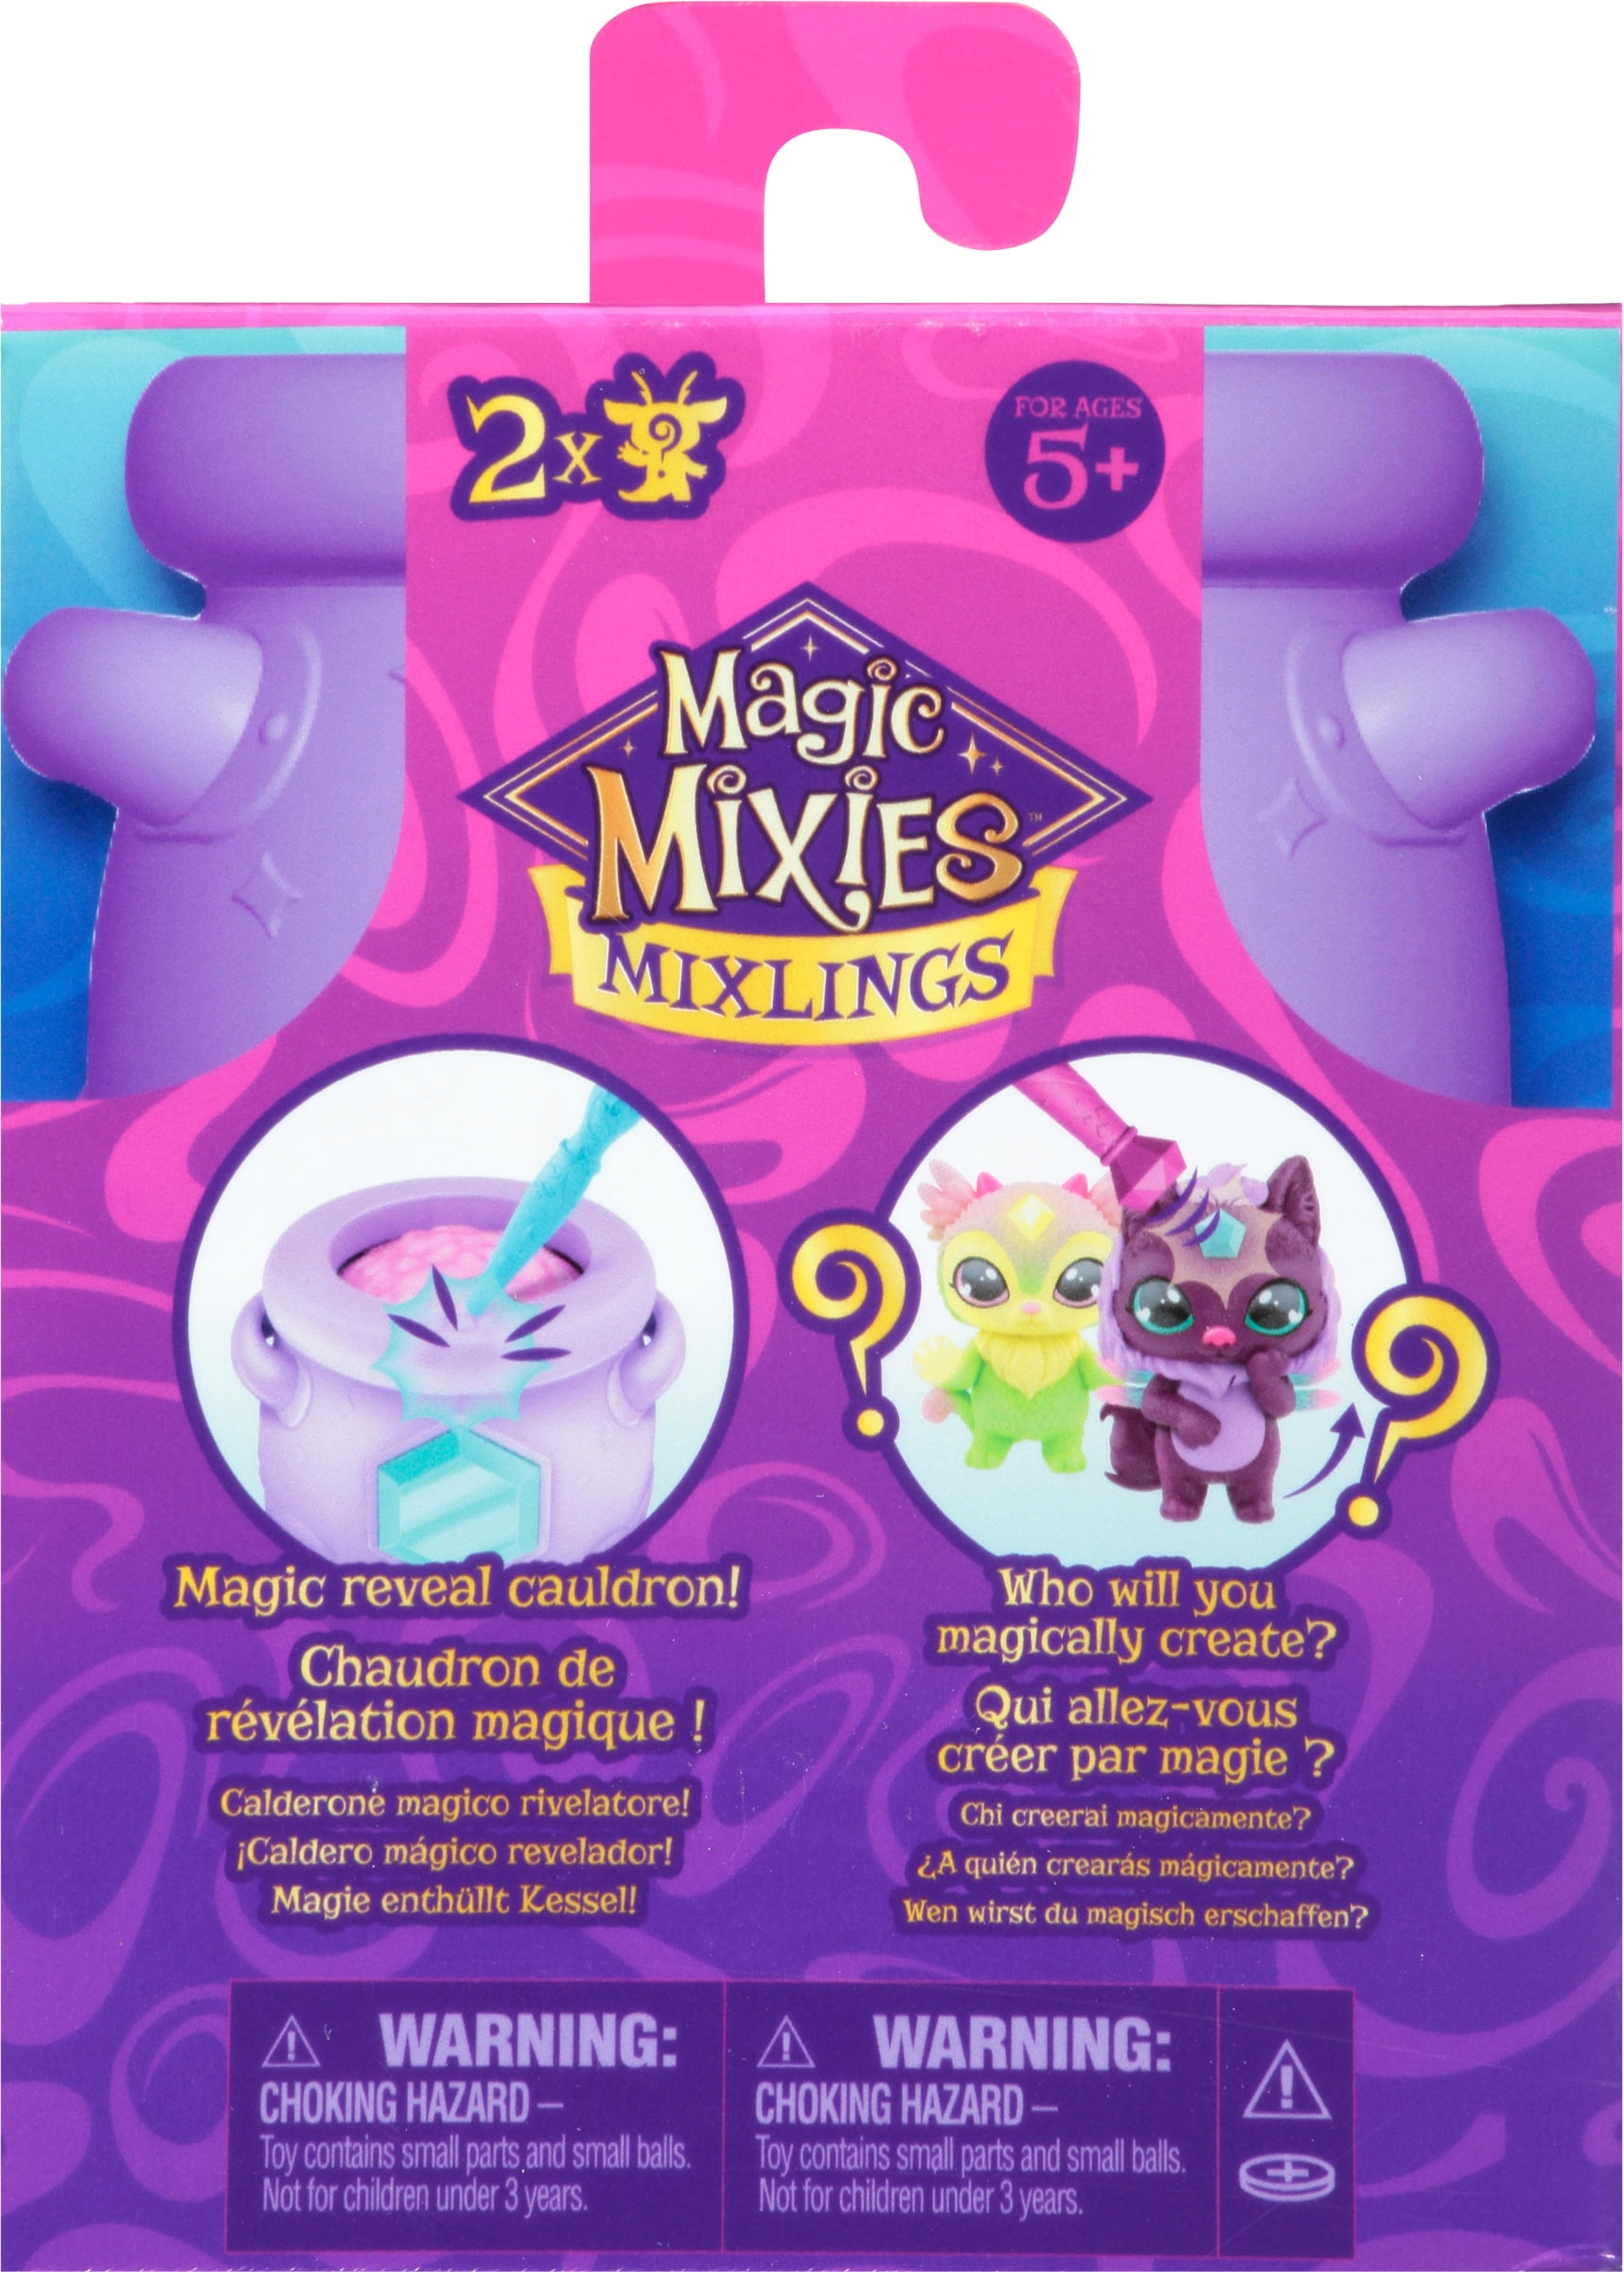 Magic Mixies Mixlings Tap & Reveal Cauldron